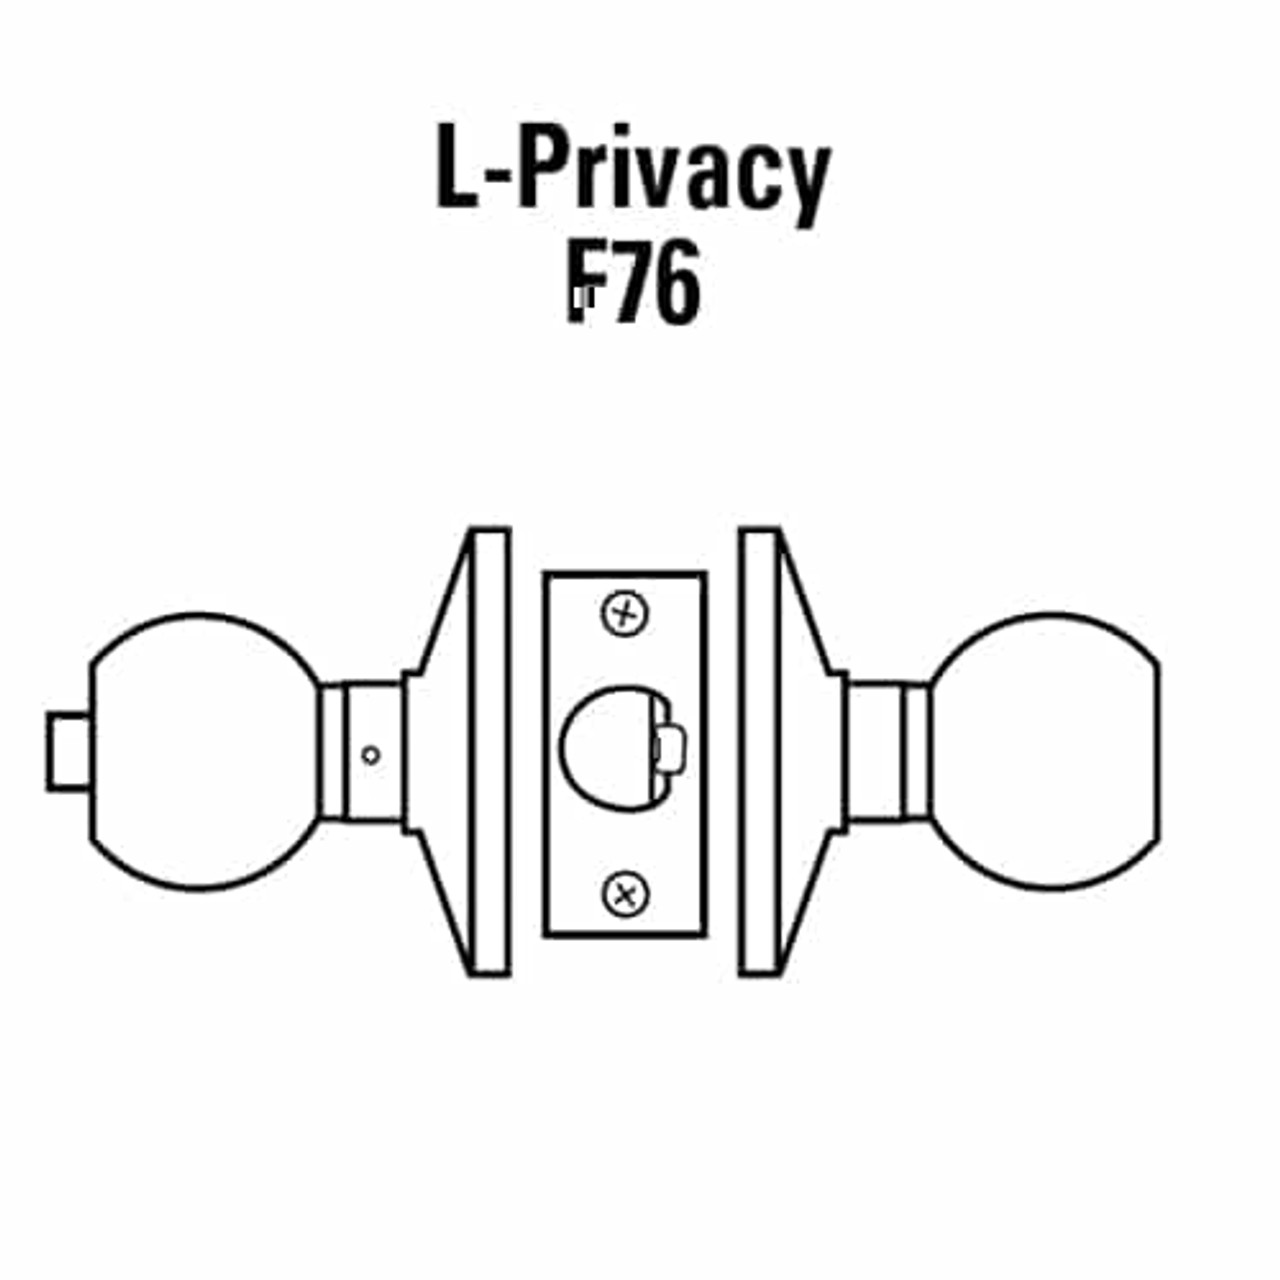 6K30L4CSTK626 Best 6K Series Privacy Medium Duty Cylindrical Knob Locks with Round Style in Satin Chrome